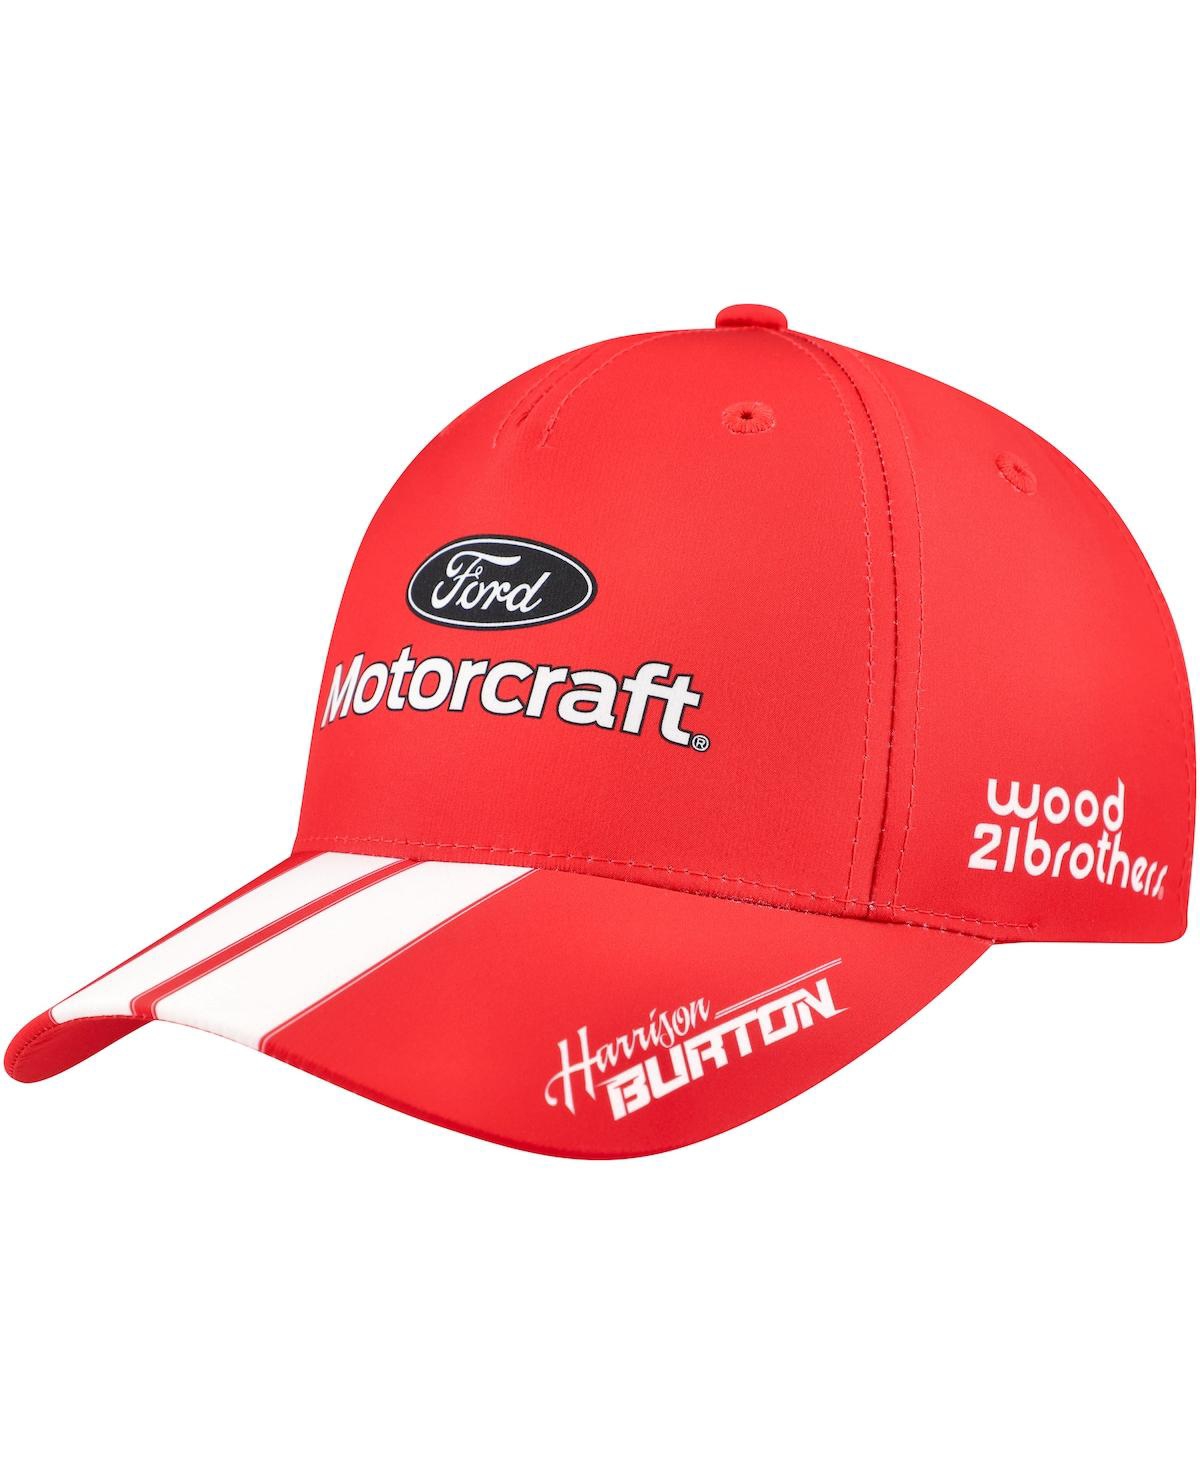 Shop Checkered Flag Sports Men's Red Harrison Burton Ford Motorcraft Uniform Adjustable Hat